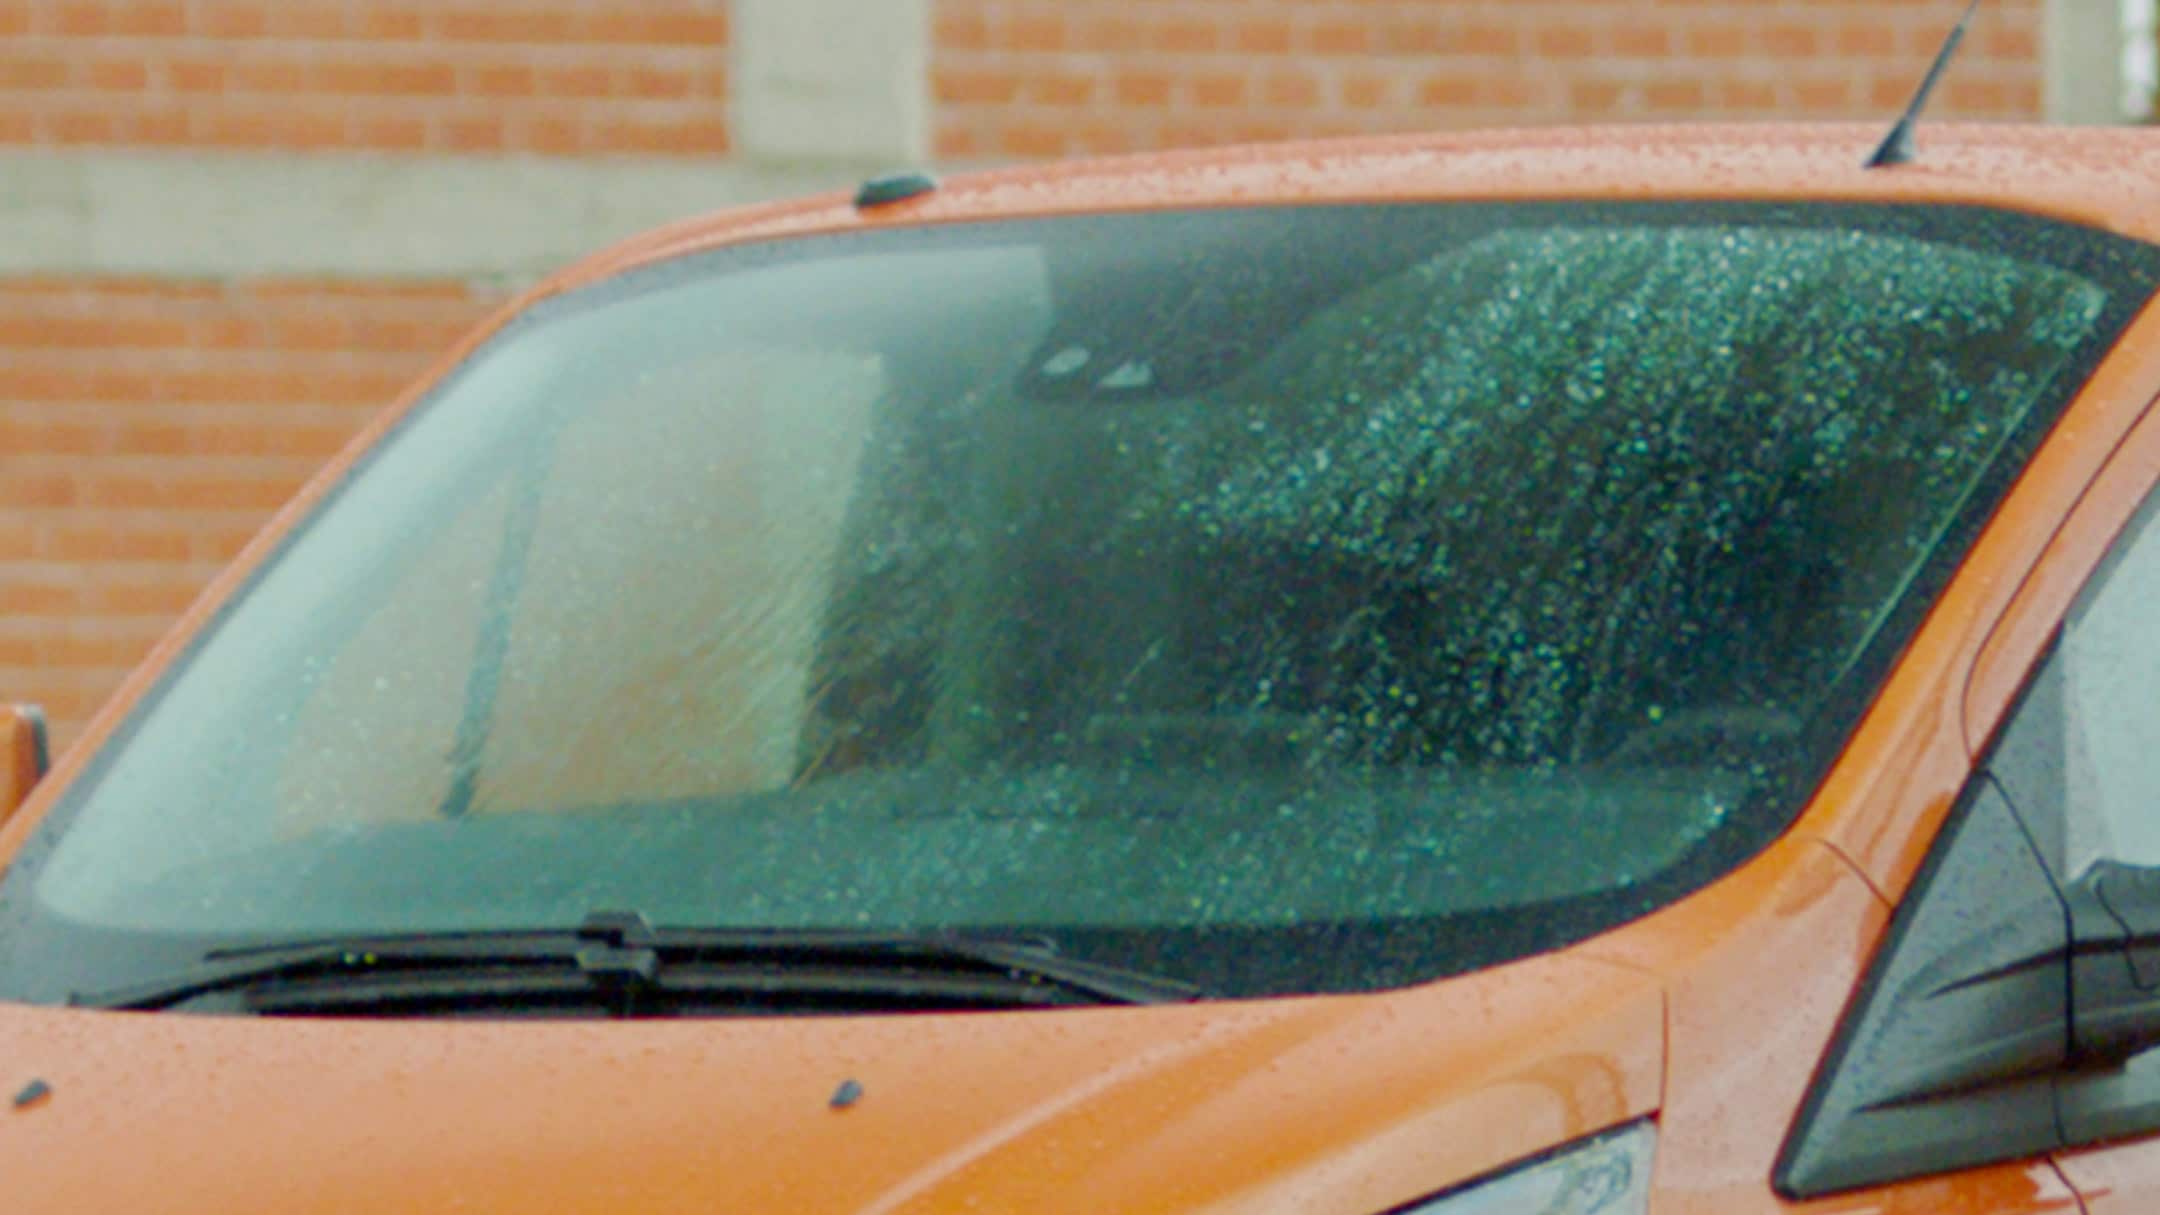 New Ford Transit Custom rain sensing wipers